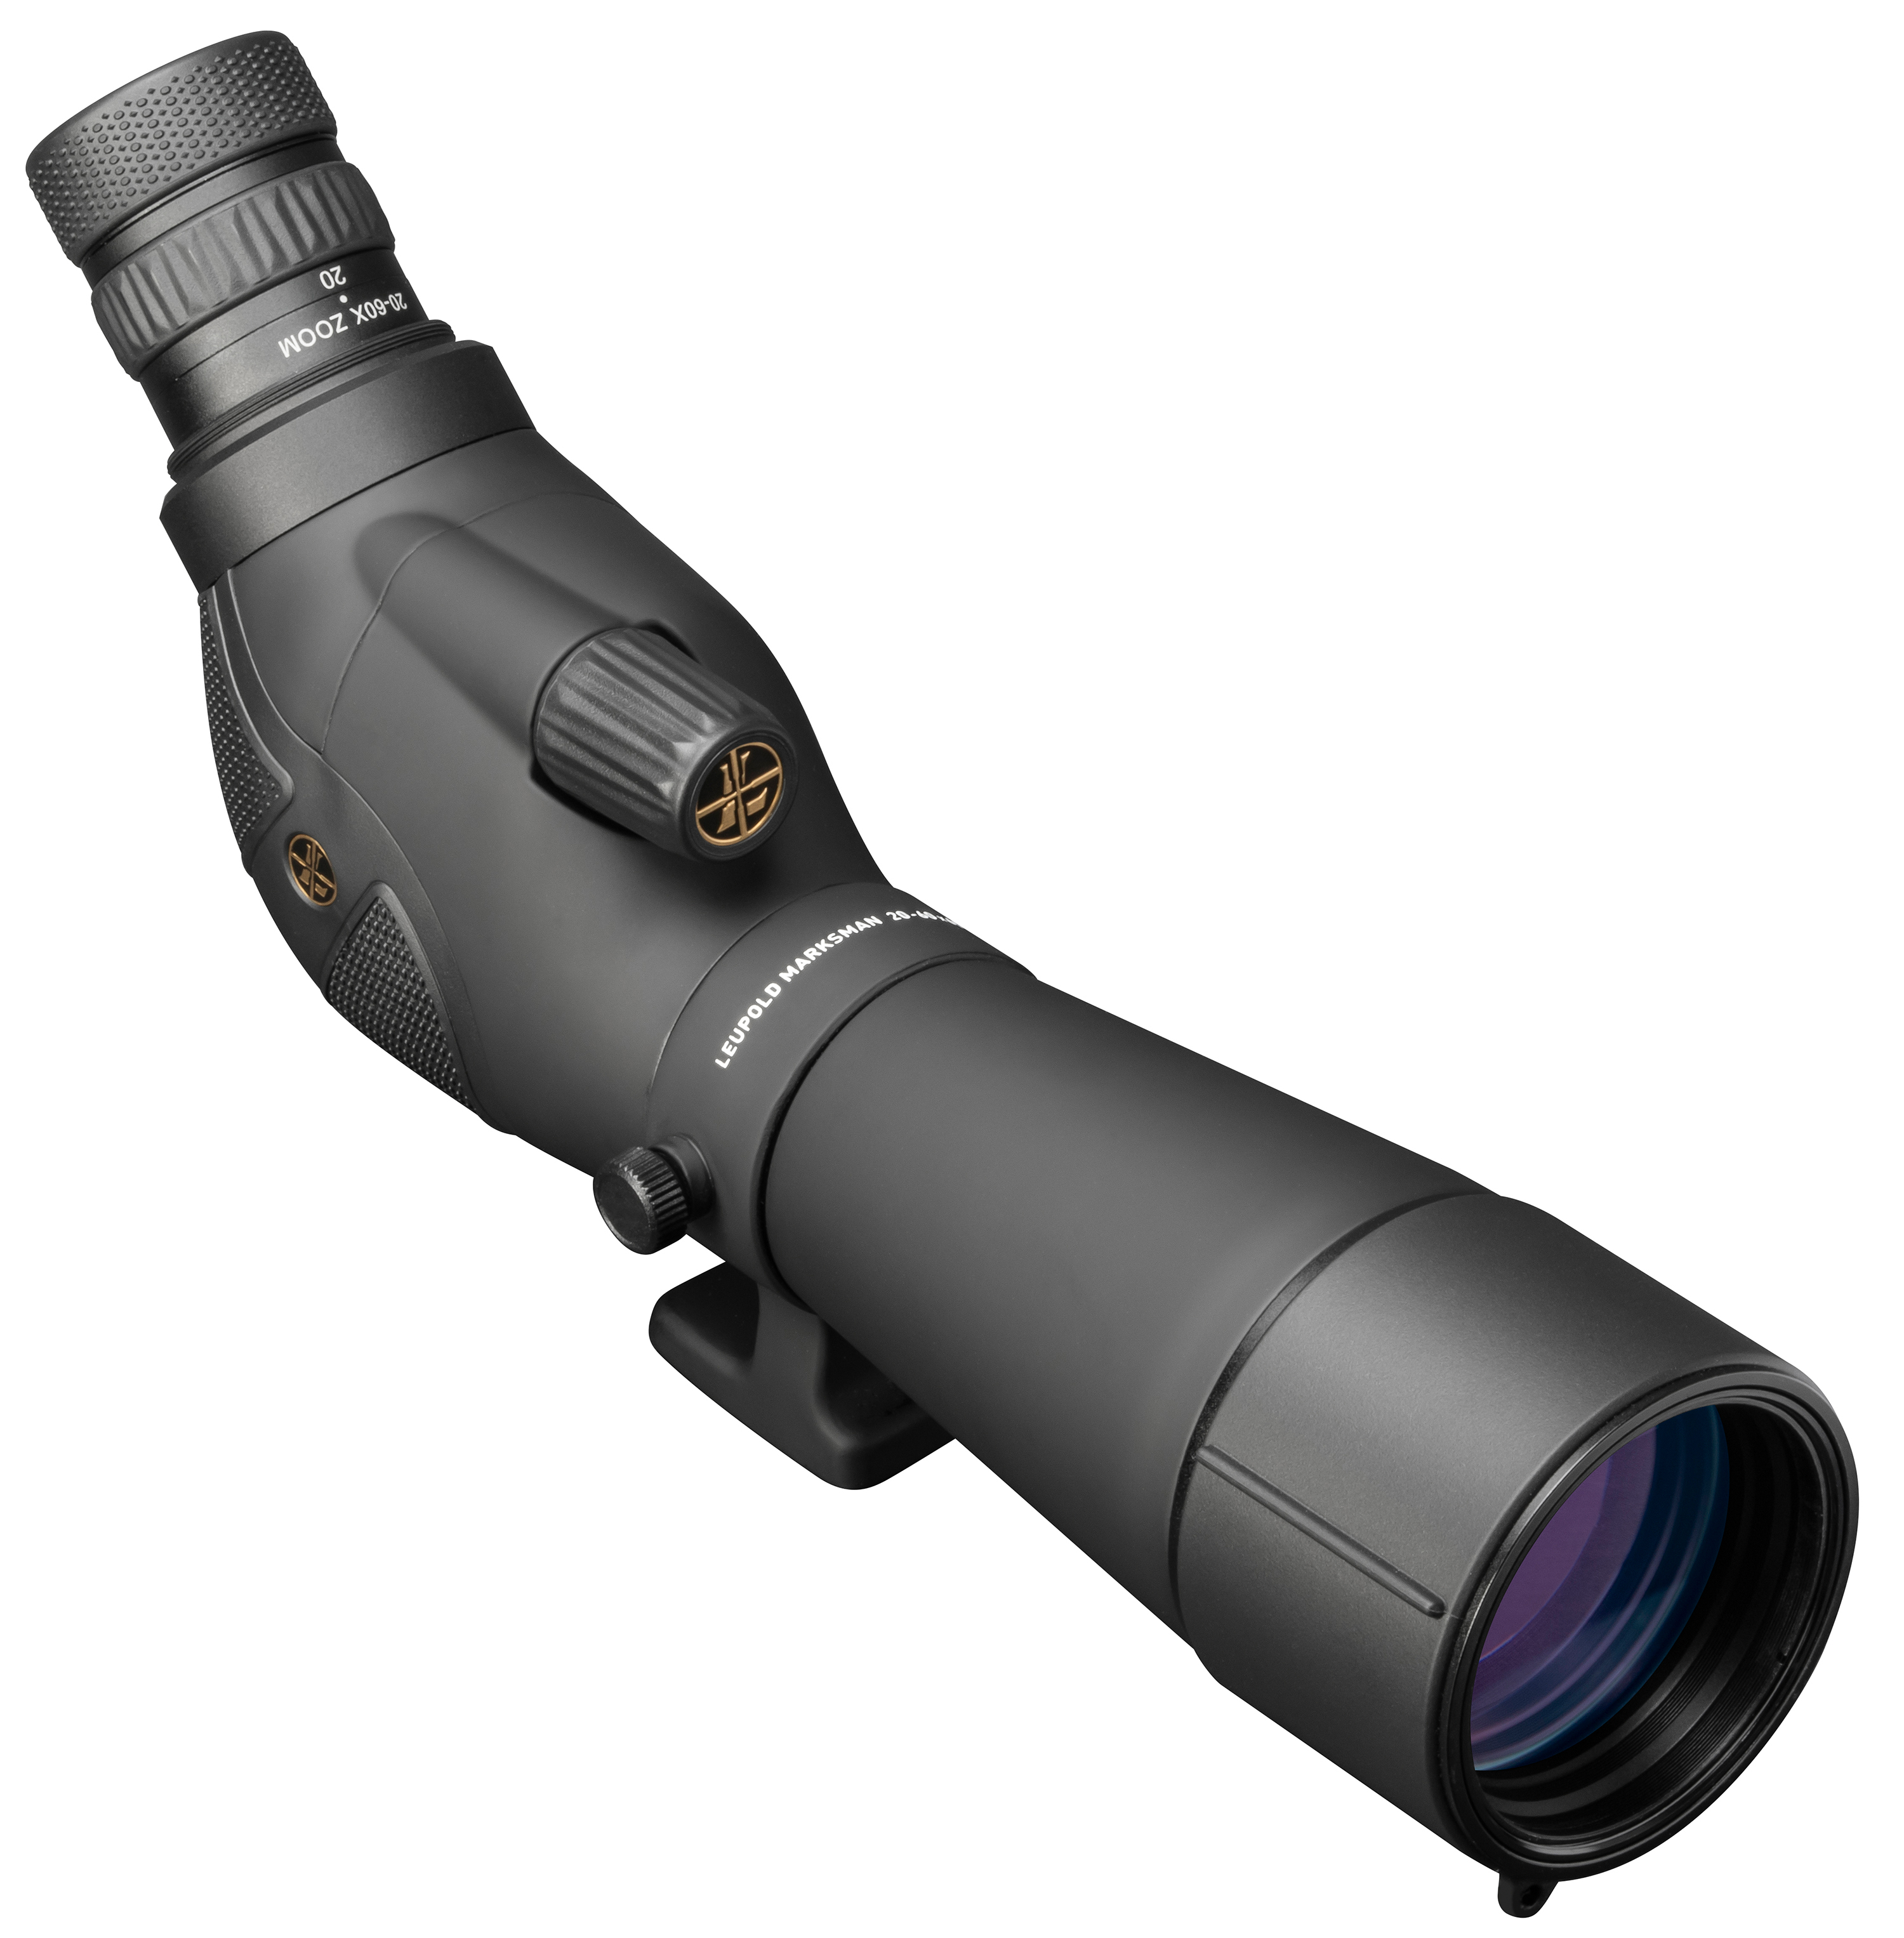 Зрительная труба Celestron c65 Mini Mak. Leupold. Konus spotting scope Konuspot-60c 20-60x60. Ed spotting scope 25-75×60. Has scope